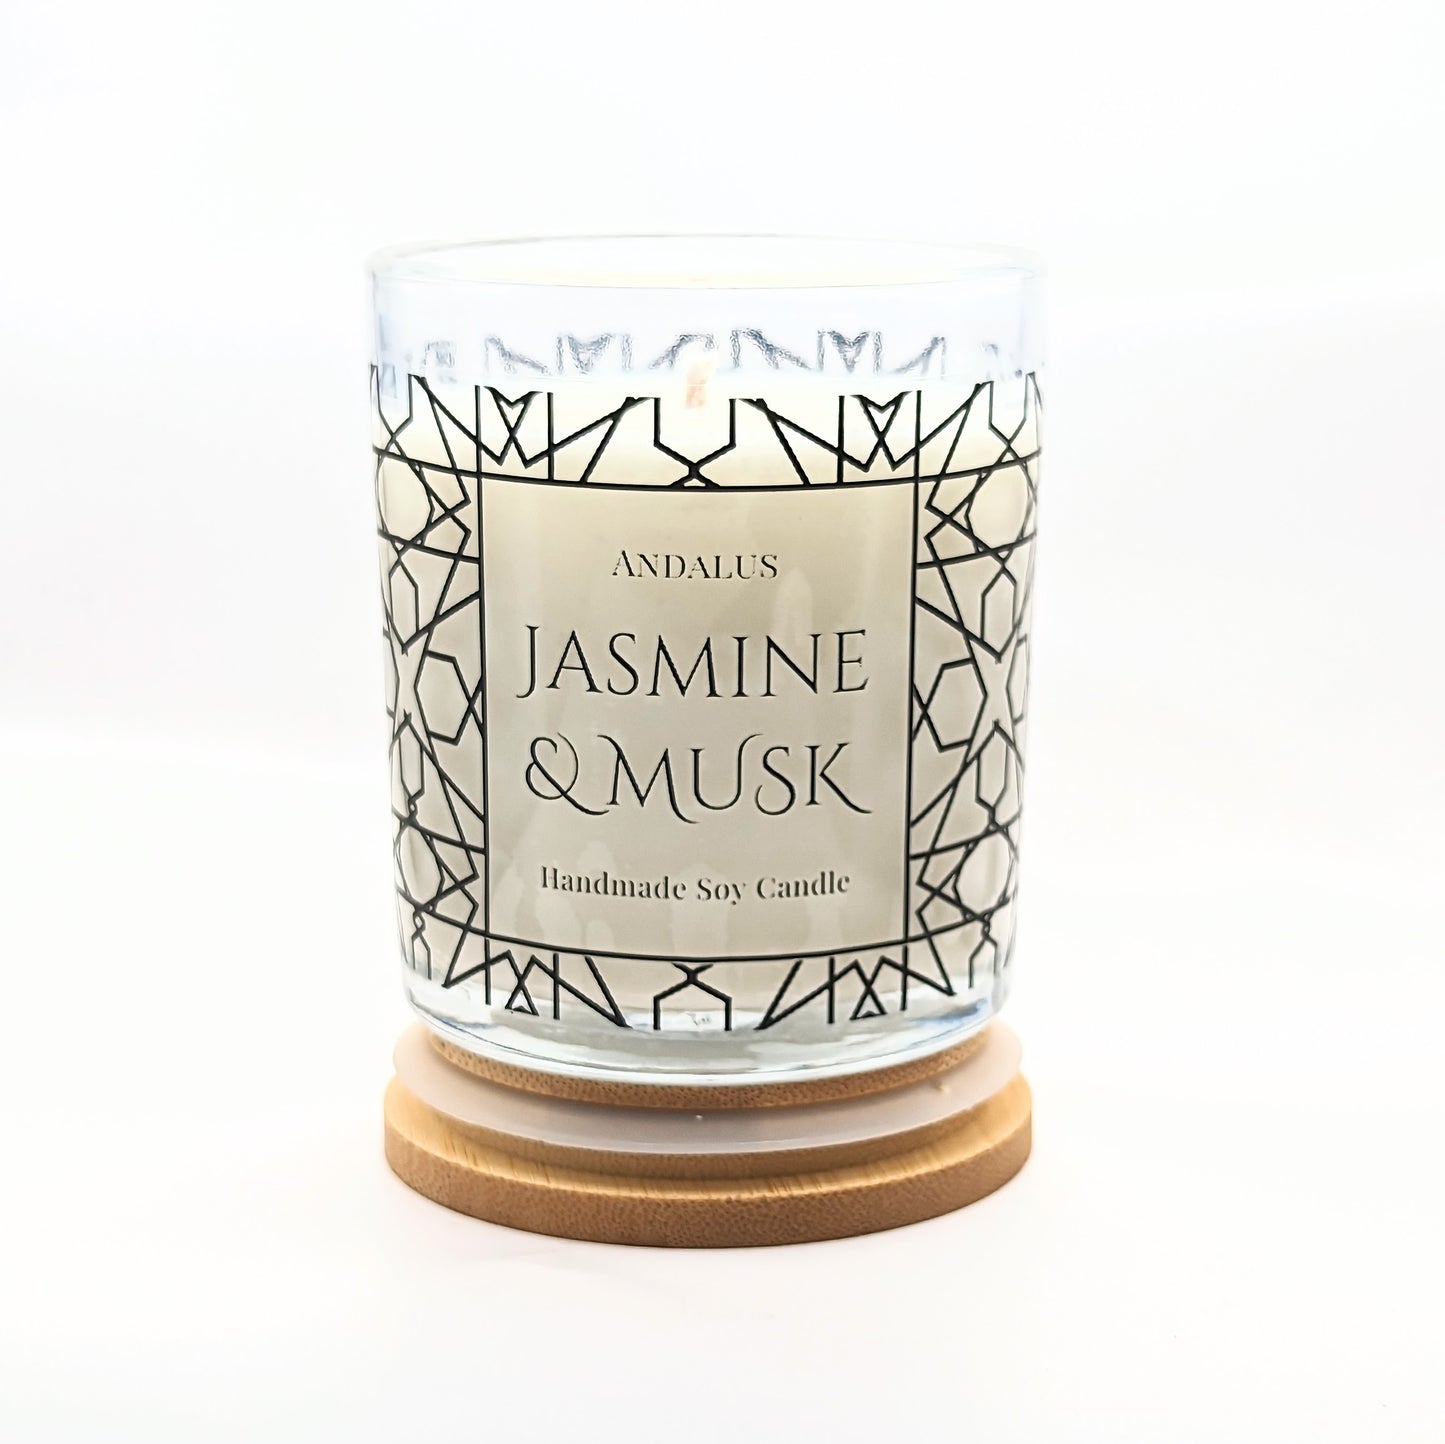 Jasmine & Musk Candle